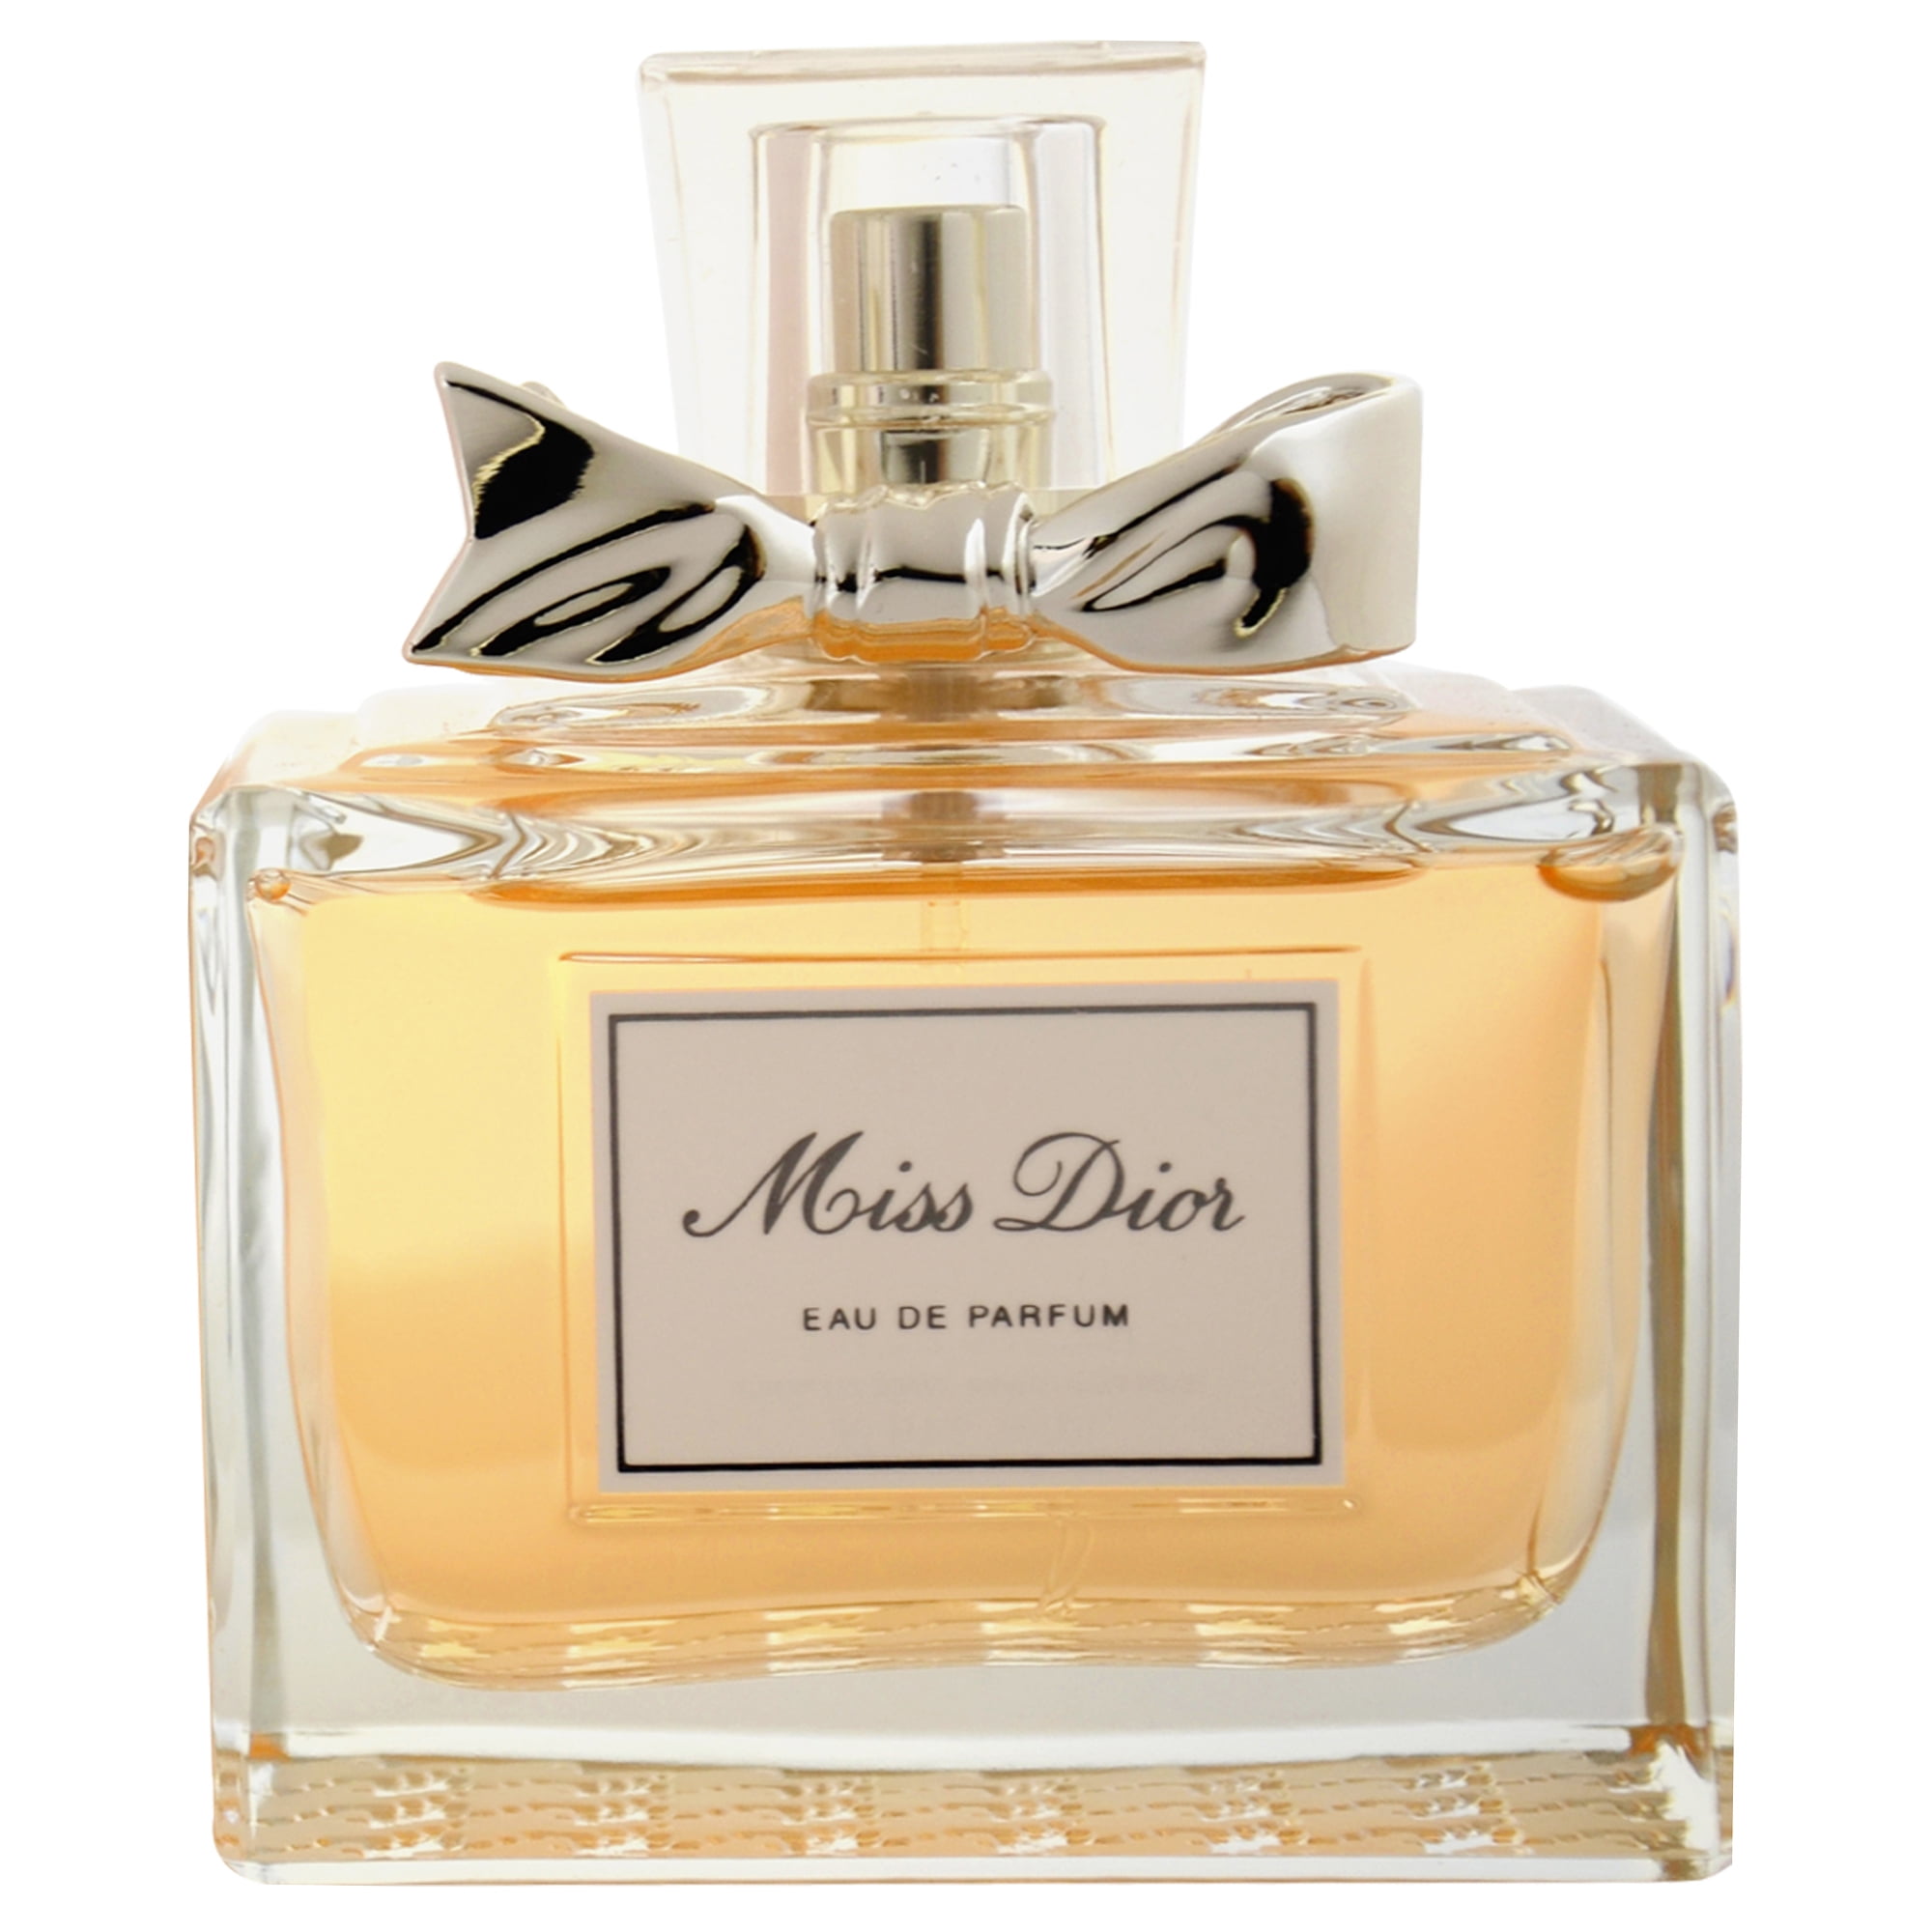 Buy miss dior perfume